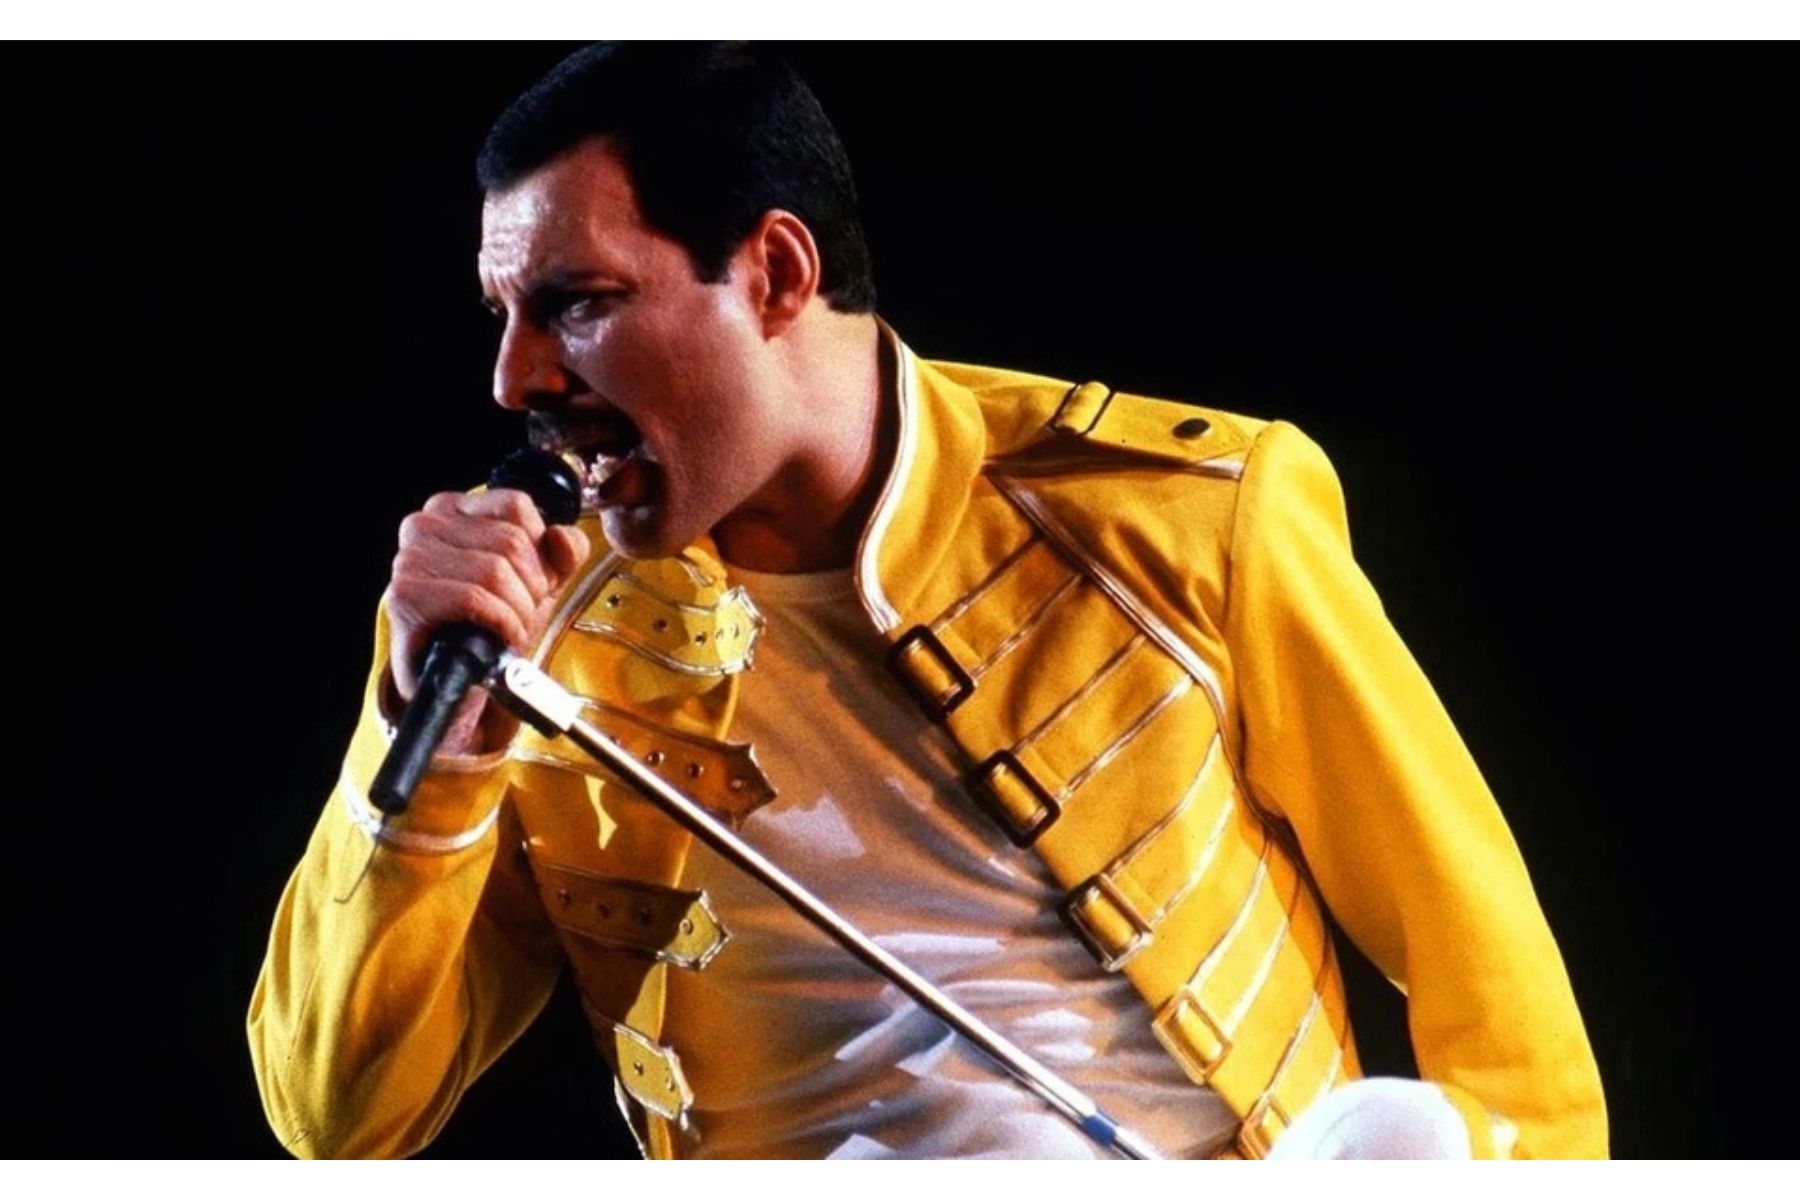 Apakah Anda suka bernyanyi seperti Freddie Mercury? Cari tahu seberapa miripnya Anda dengannya